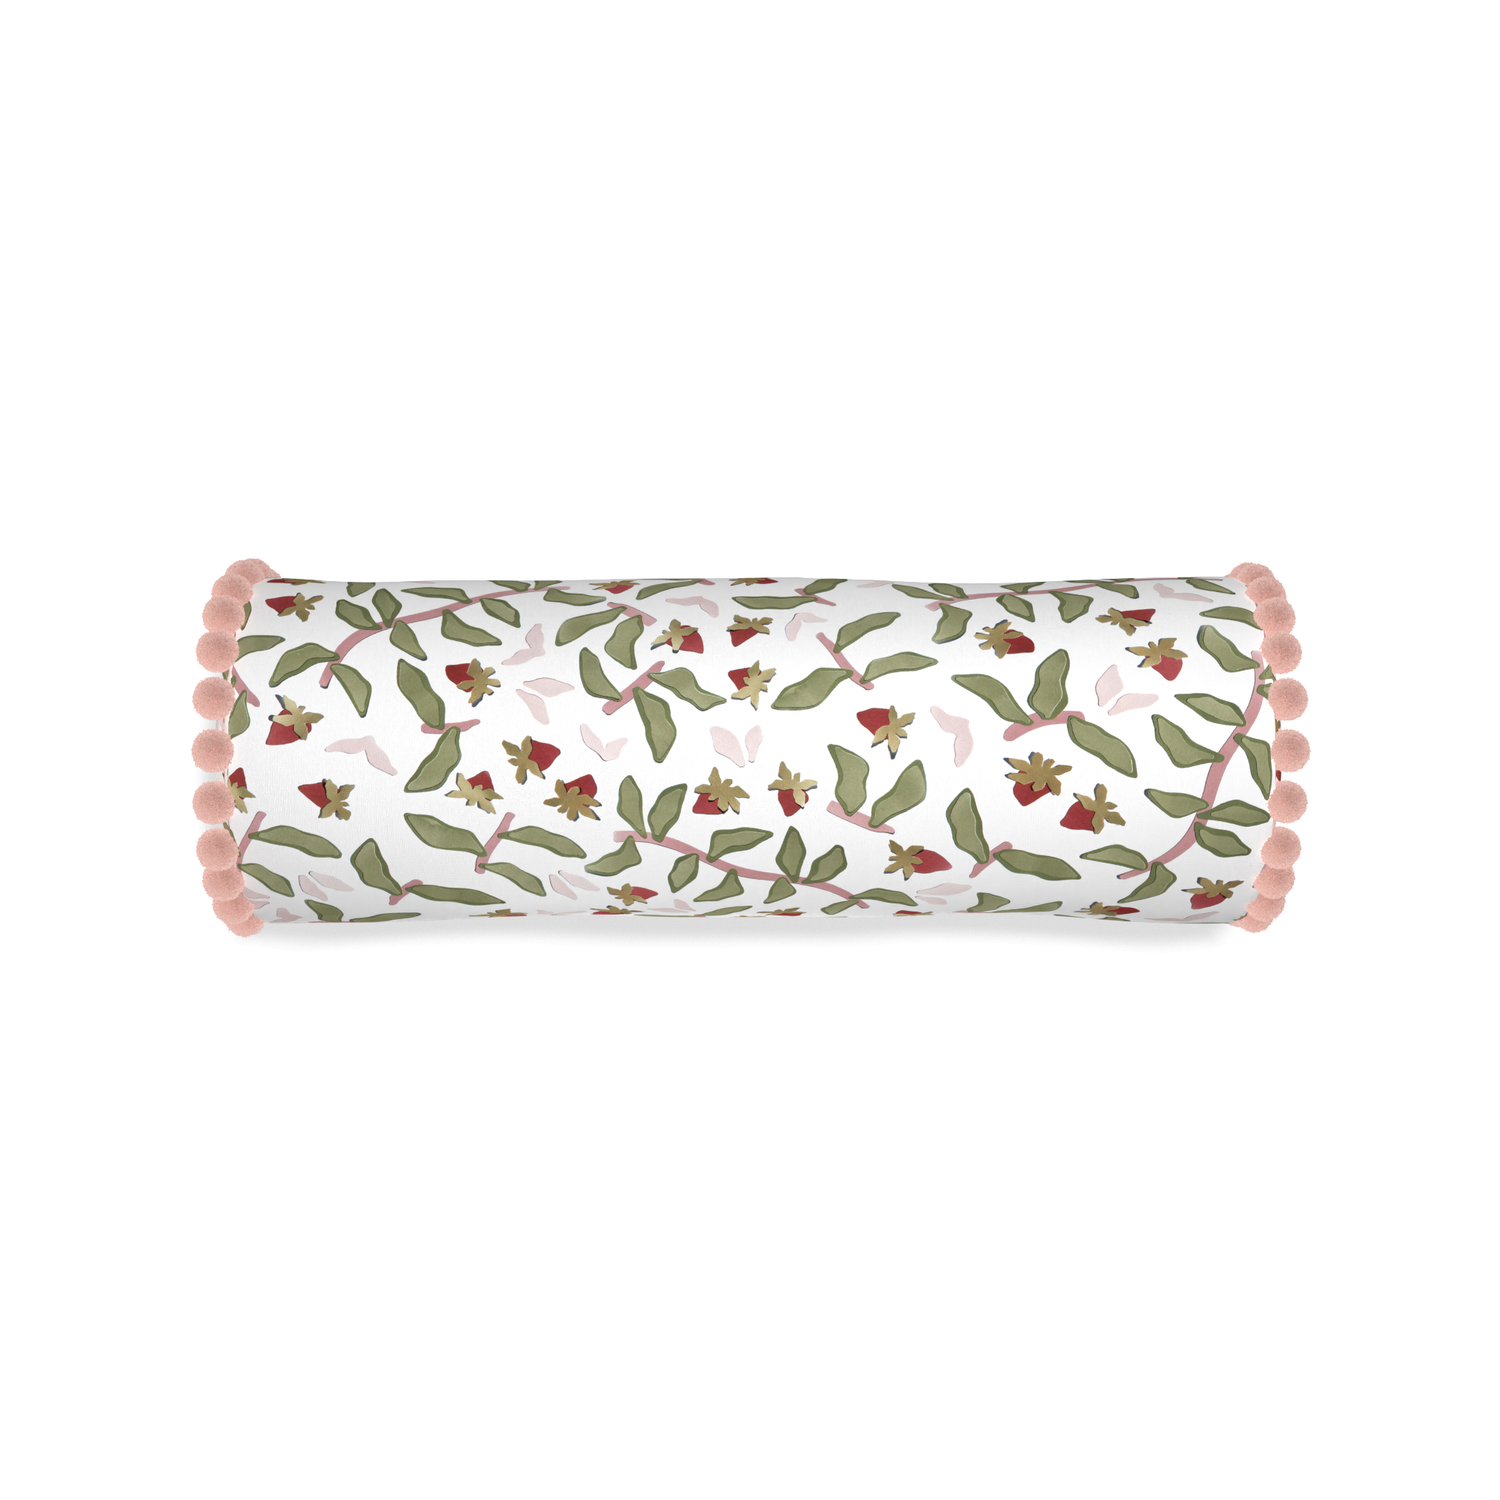 Bolster nellie custom strawberry & botanicalpillow with rose pom pom on white background